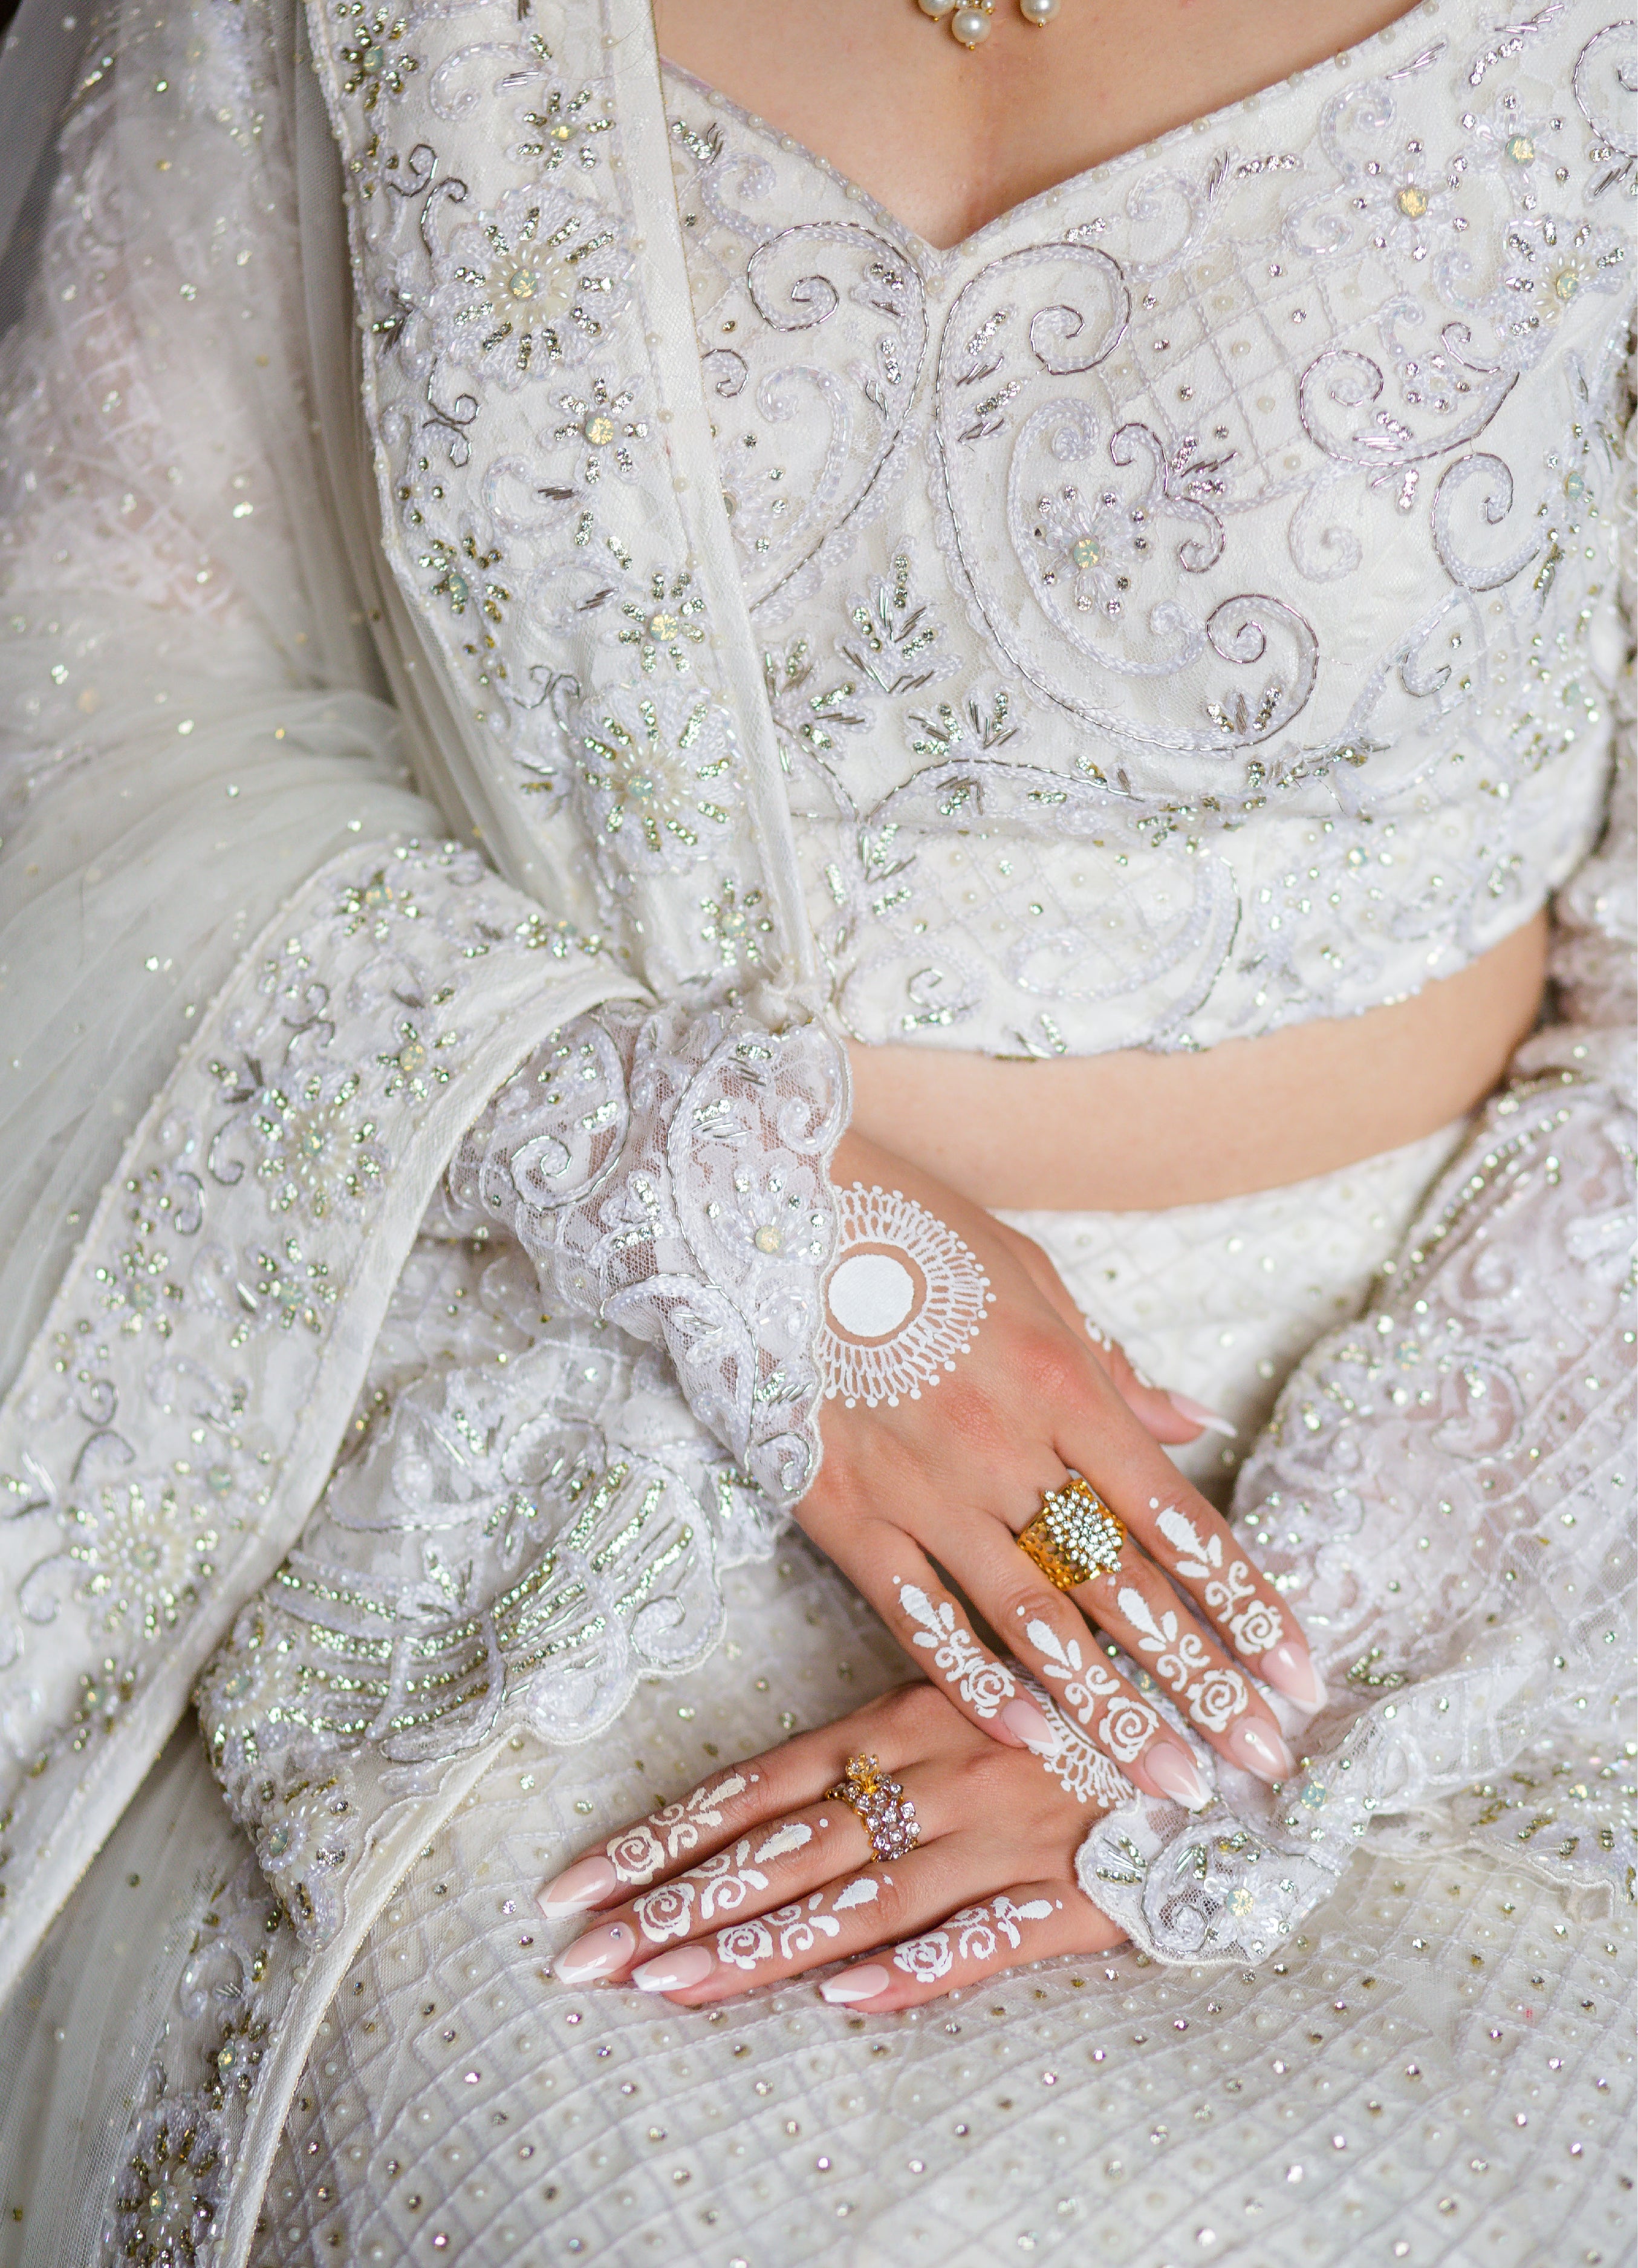 Buy Good-Looking Pink & White Diamond Golden Imitation Ring | Lehenga-Saree